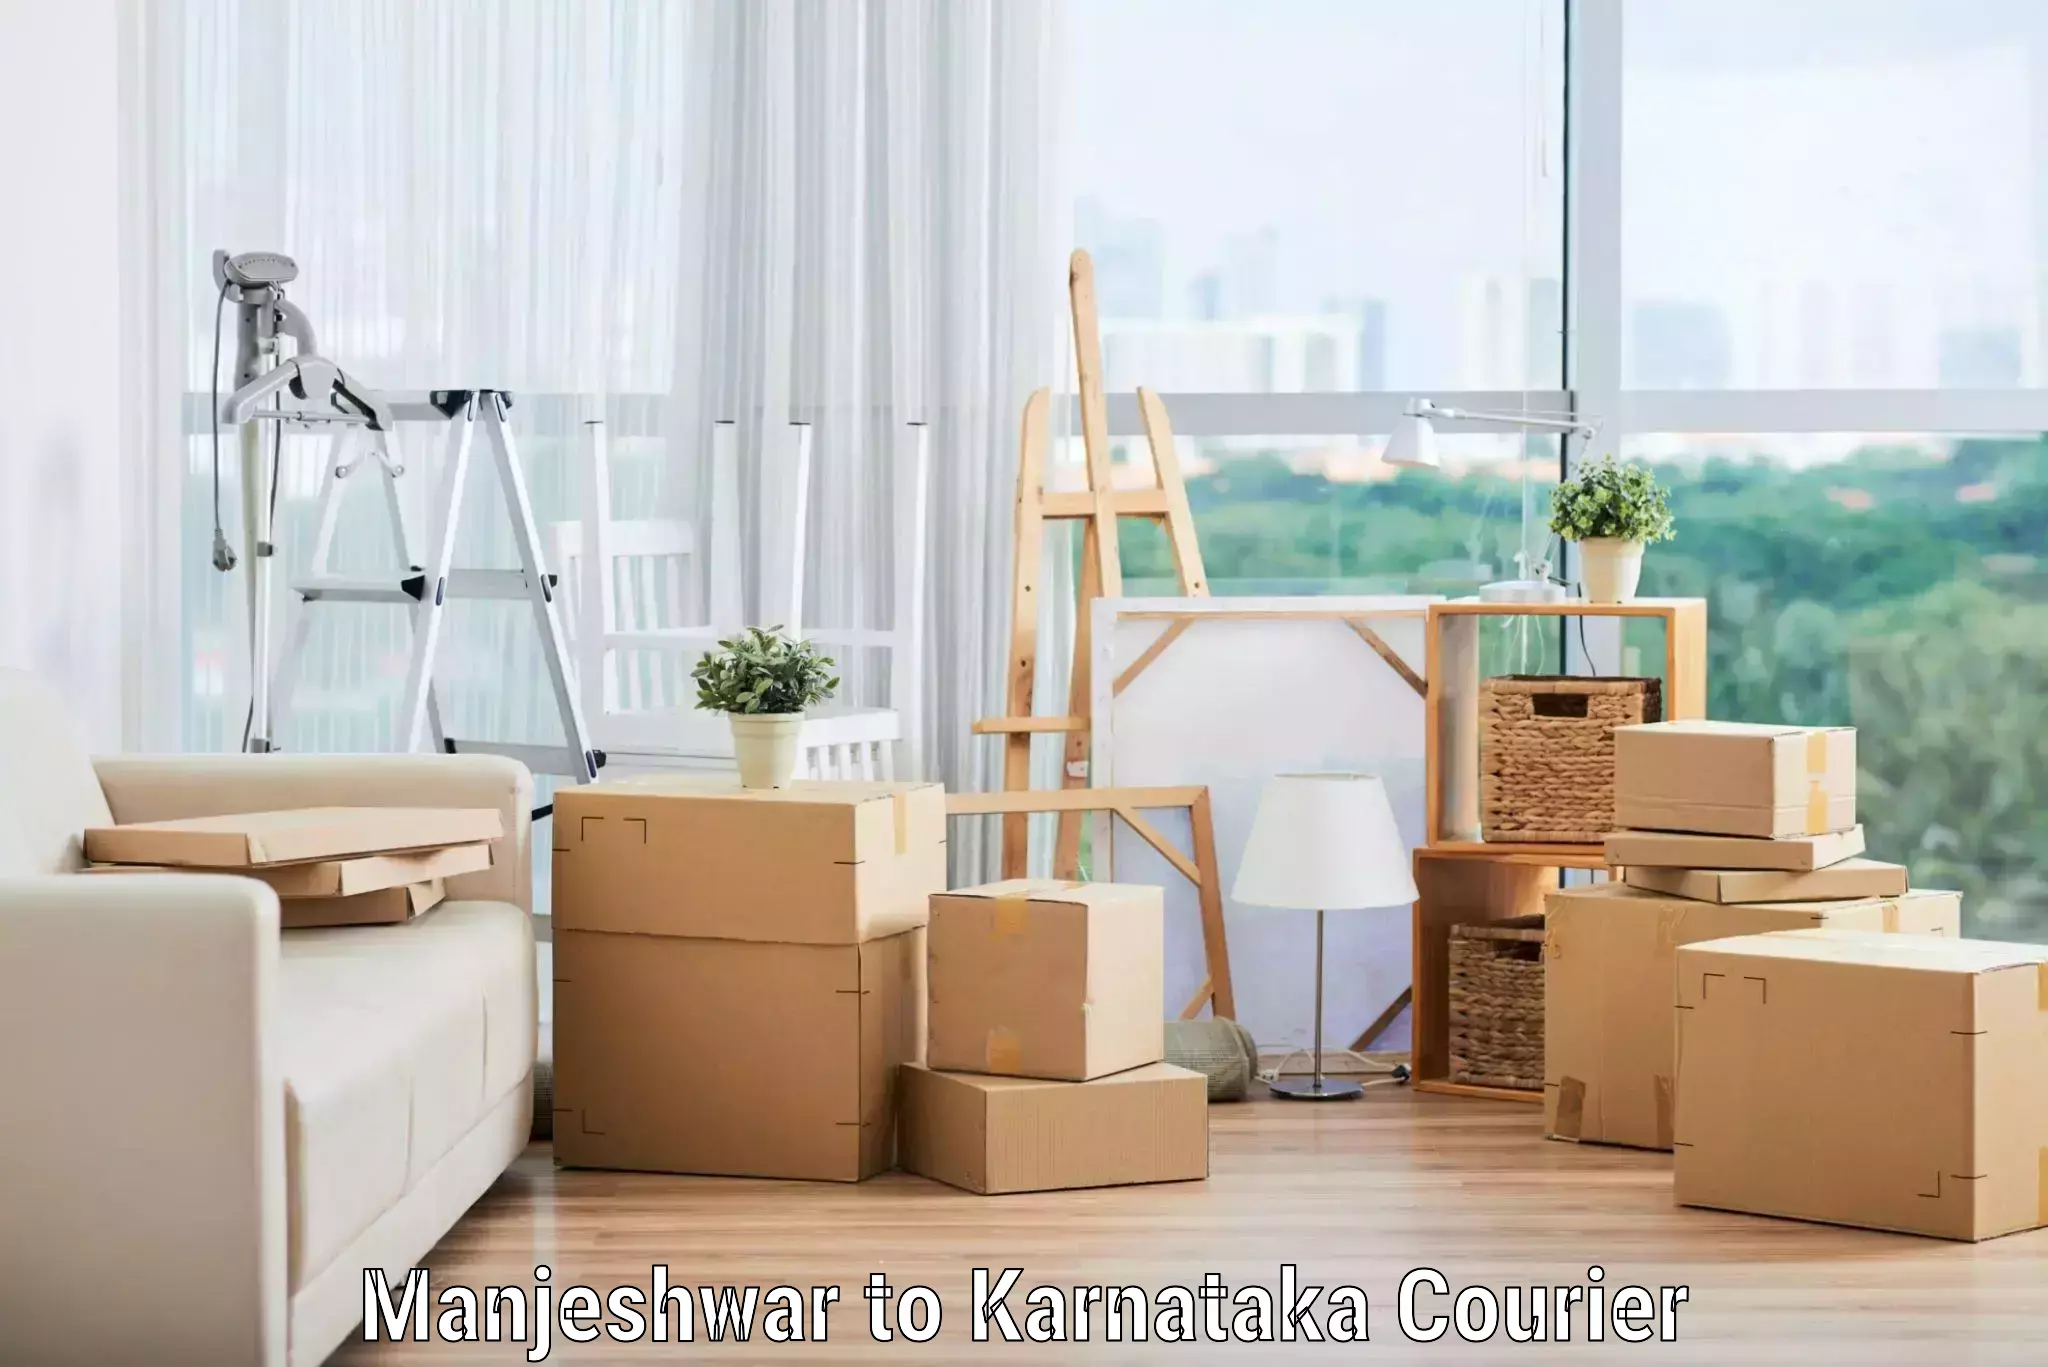 Furniture delivery service Manjeshwar to Kodagu